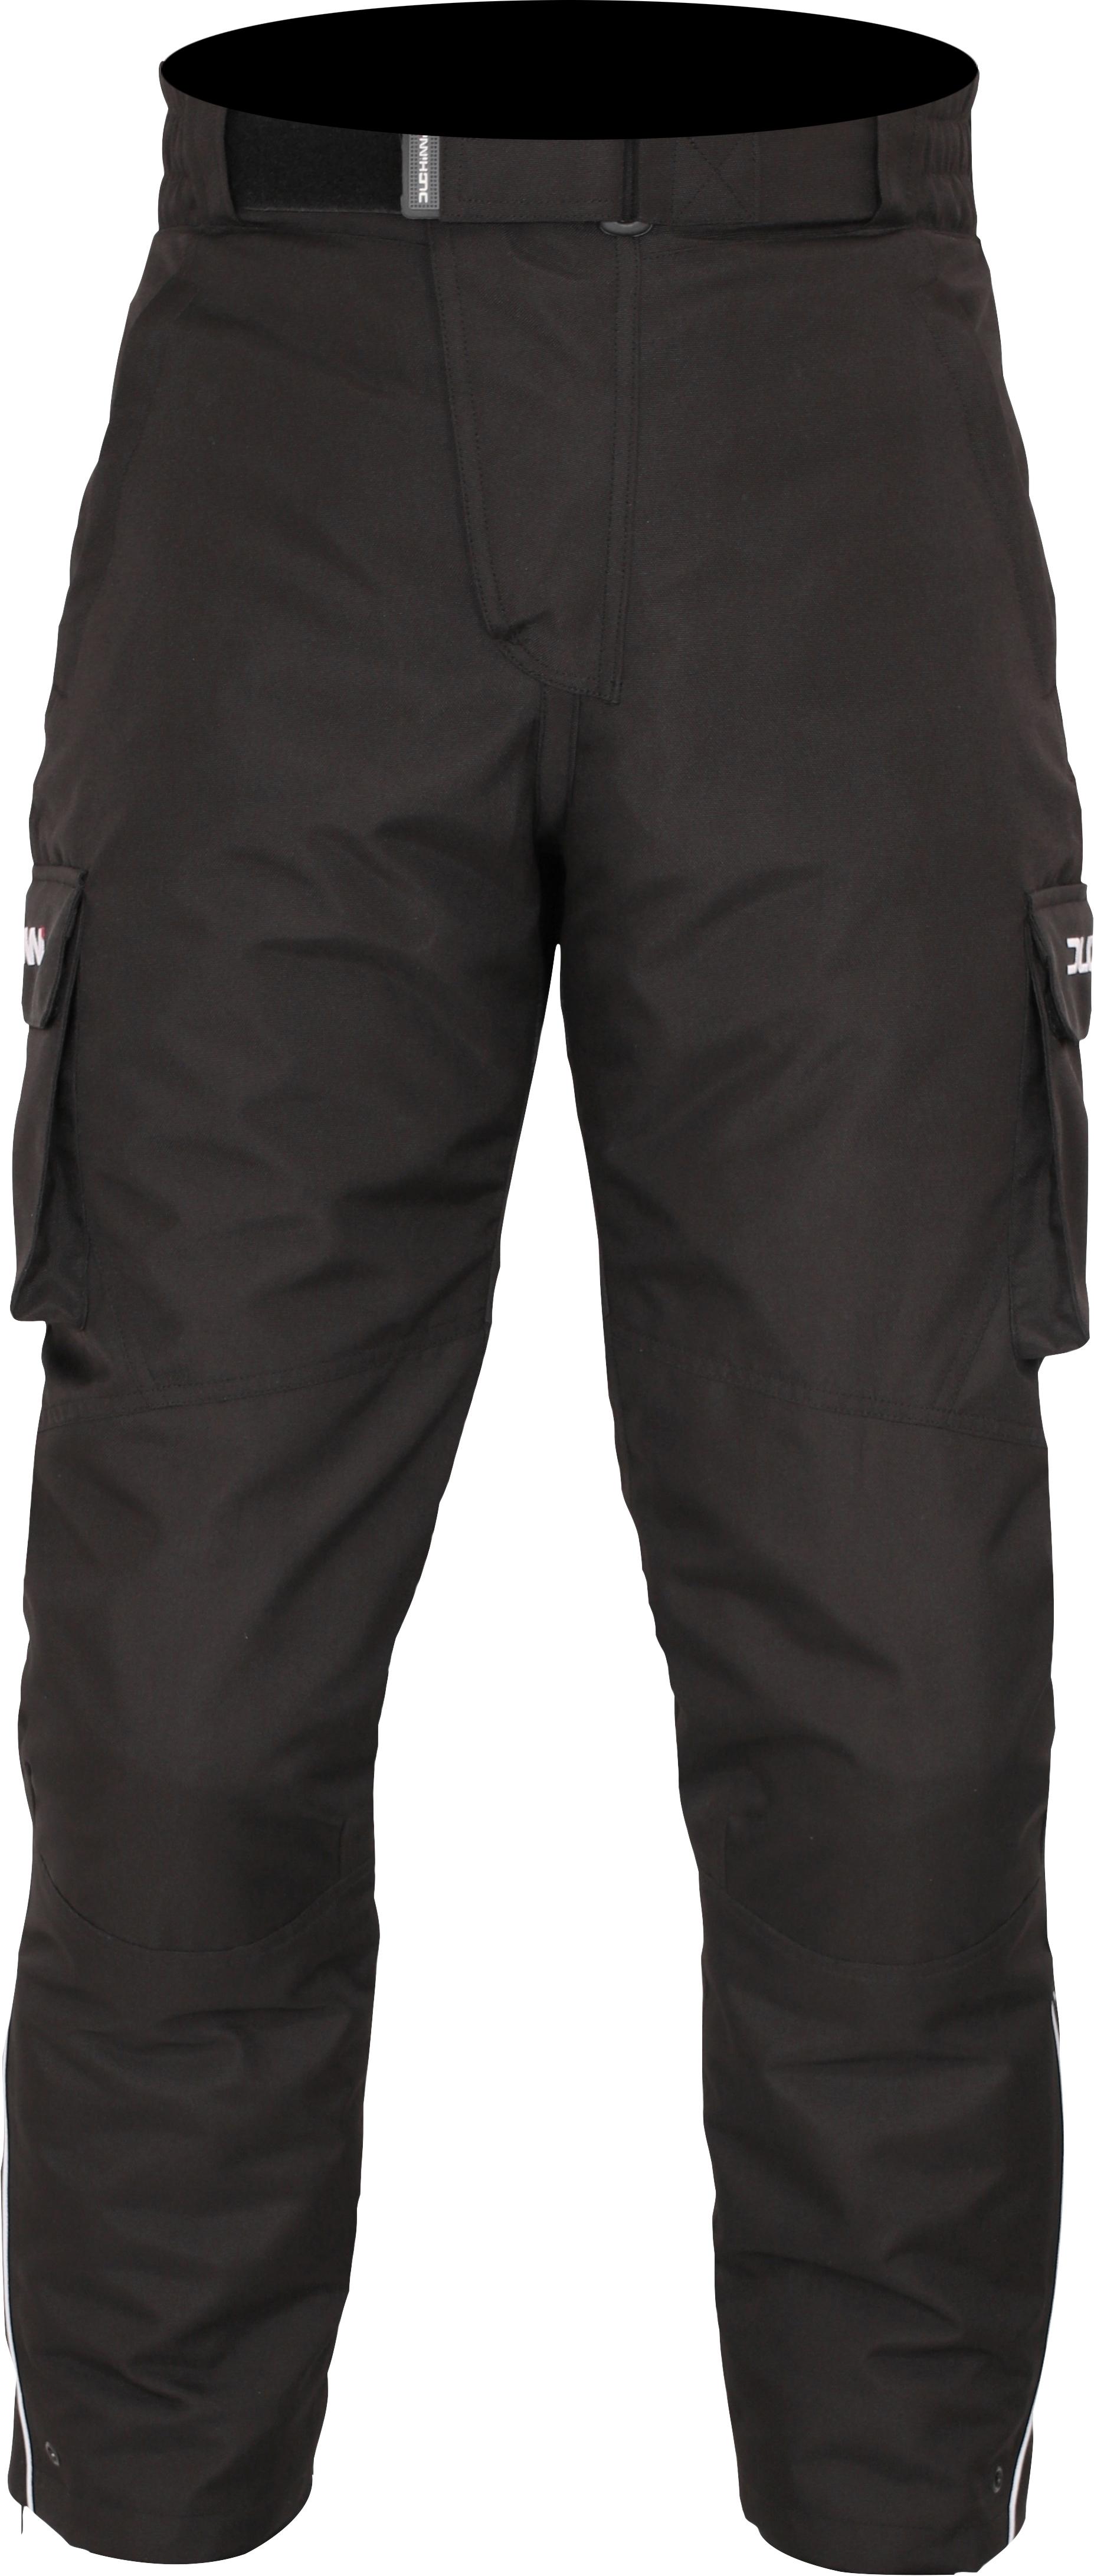 Duchinni Pacific Motorcycle Short Jeans - Black, 5Xl